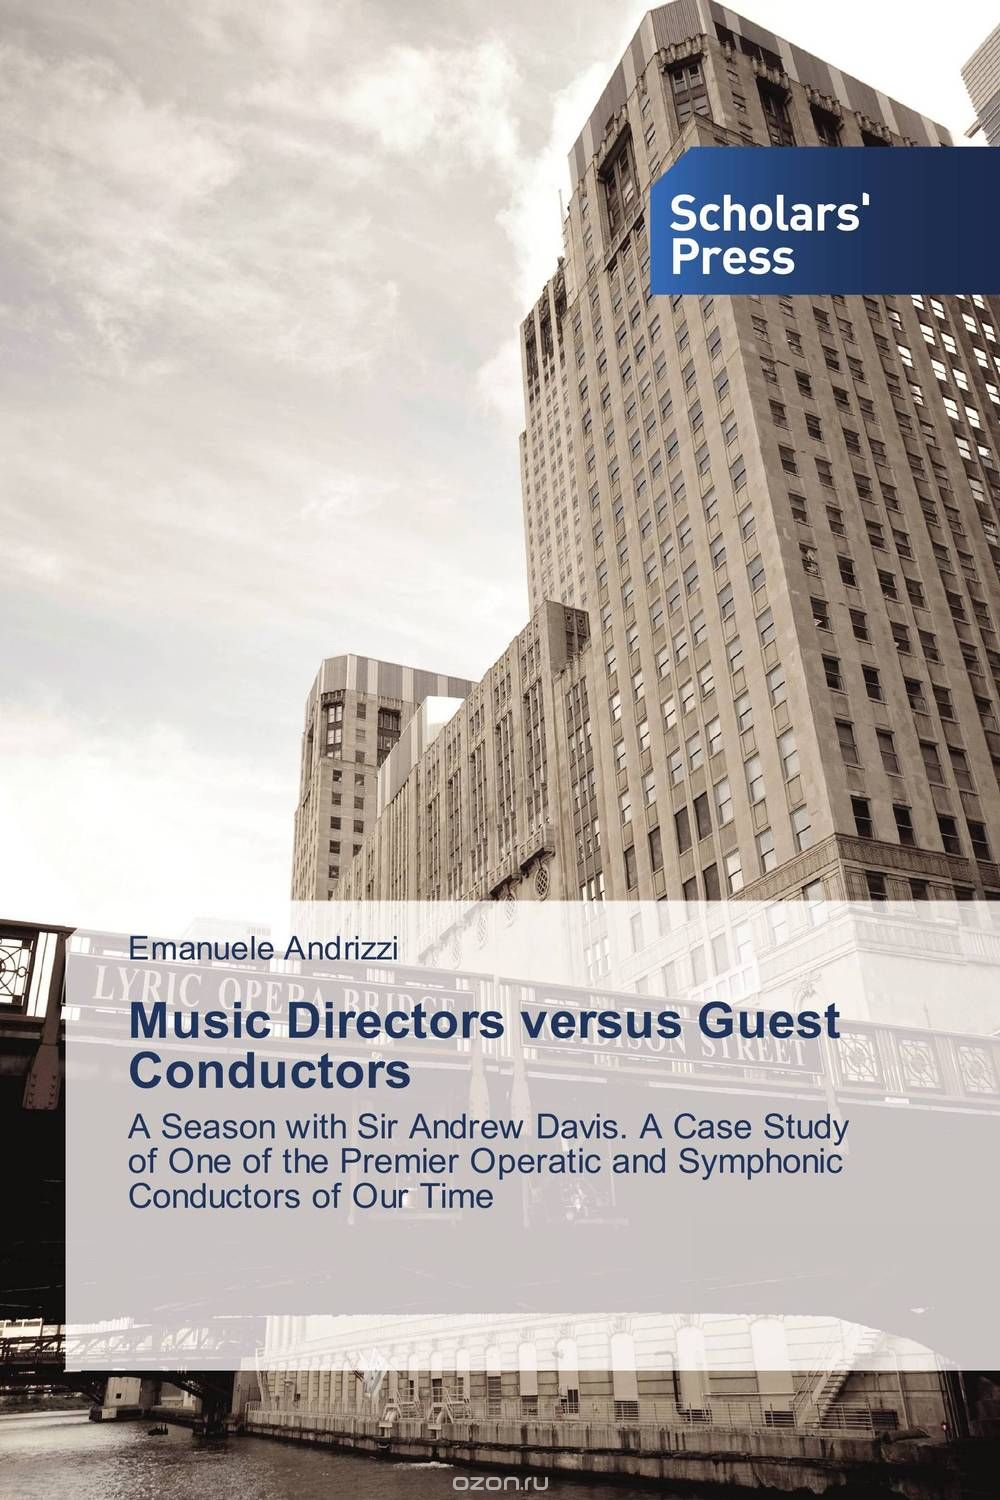 Скачать книгу "Music Directors versus Guest Conductors"